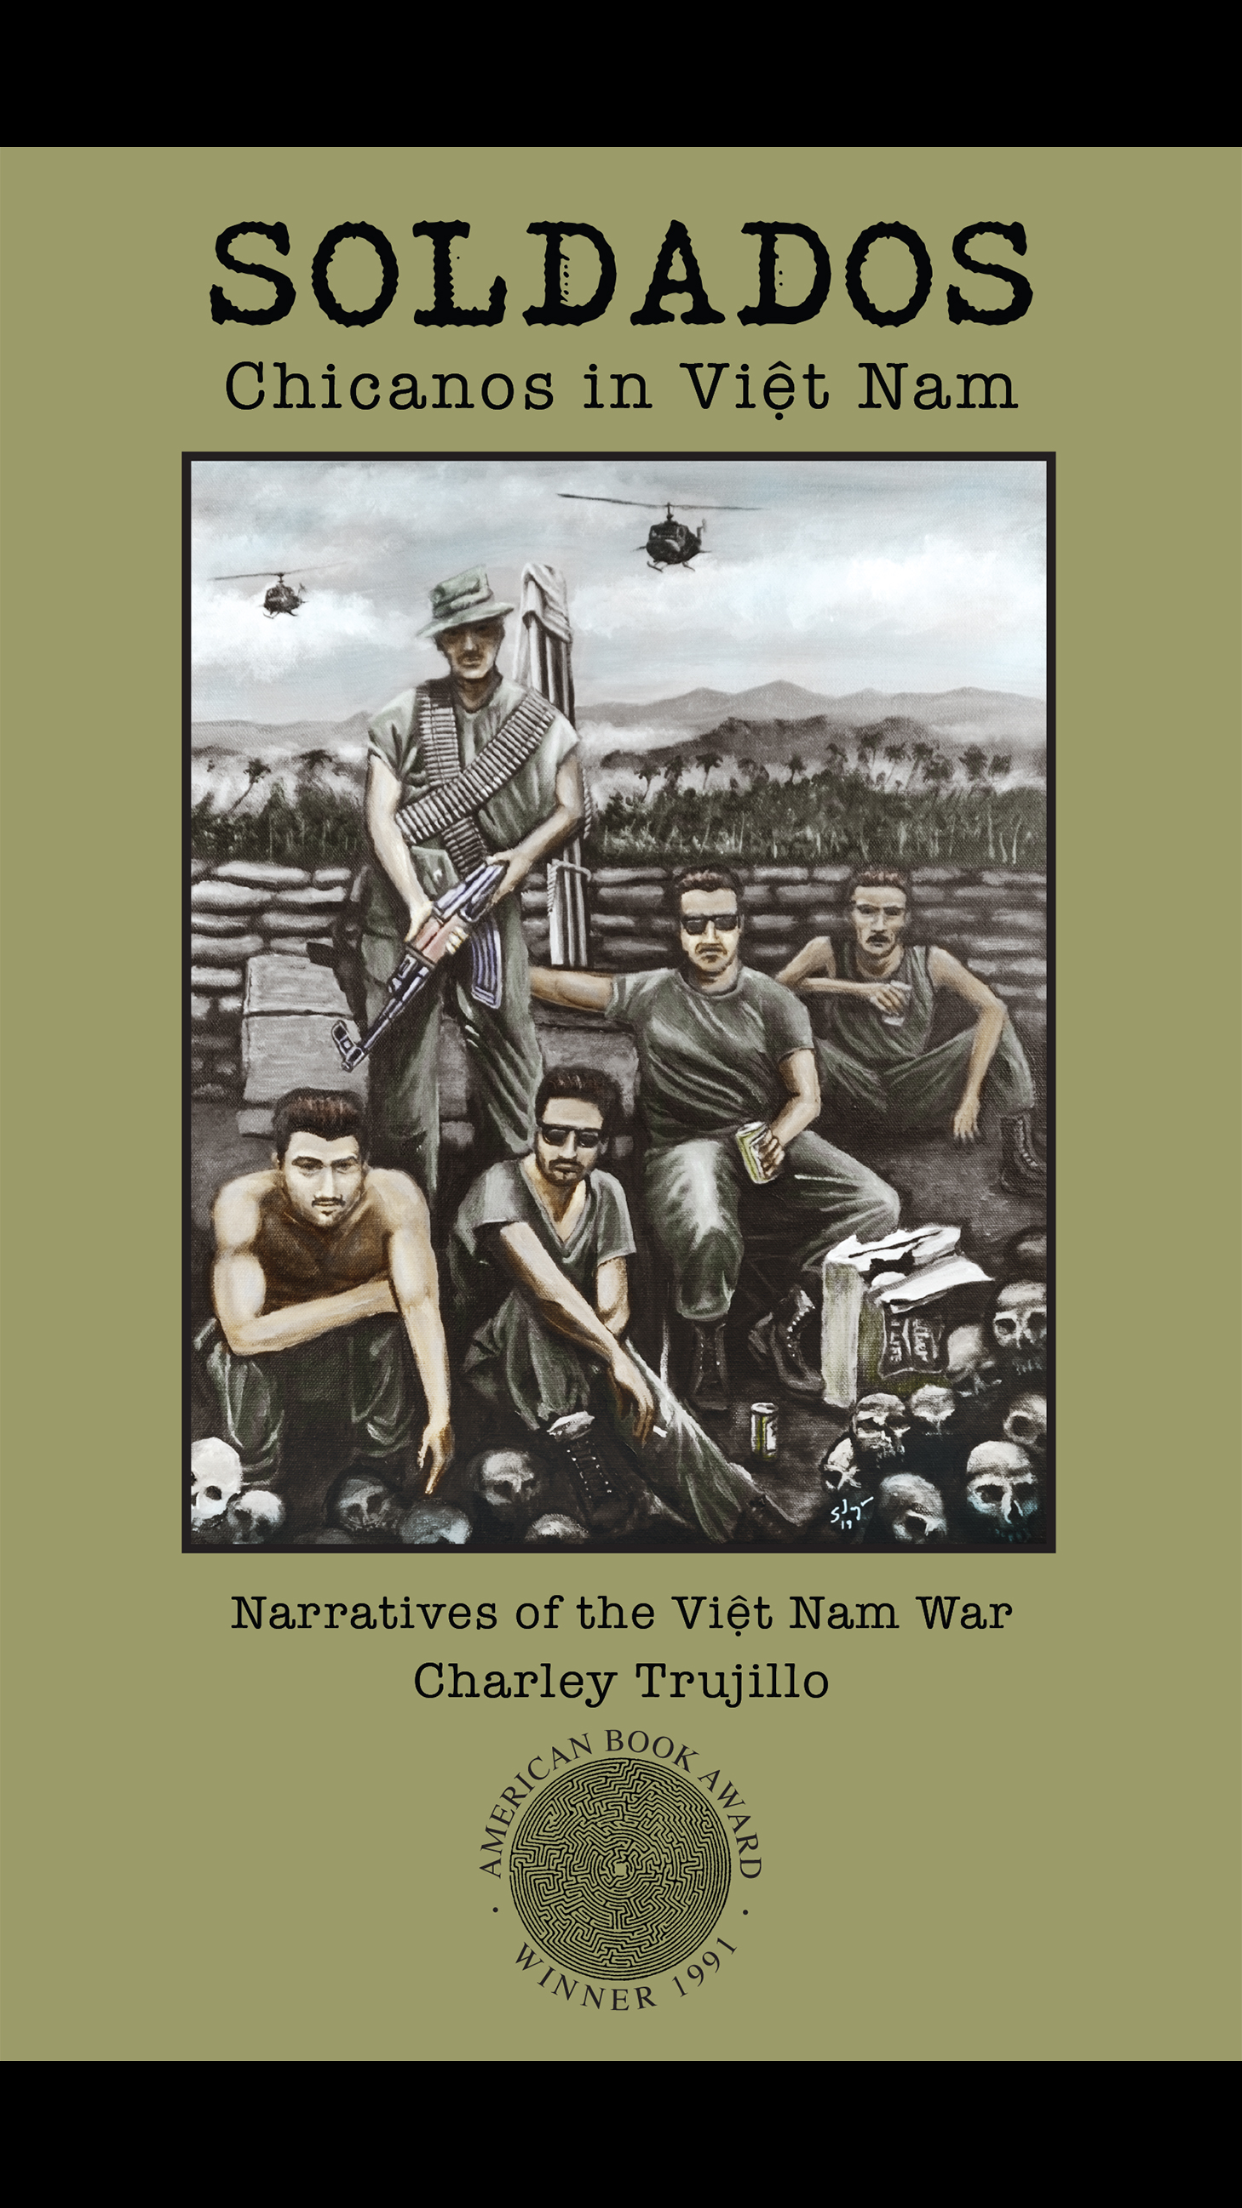 "Soldados Chicanos in Viet Nam" by Charley Trujillo